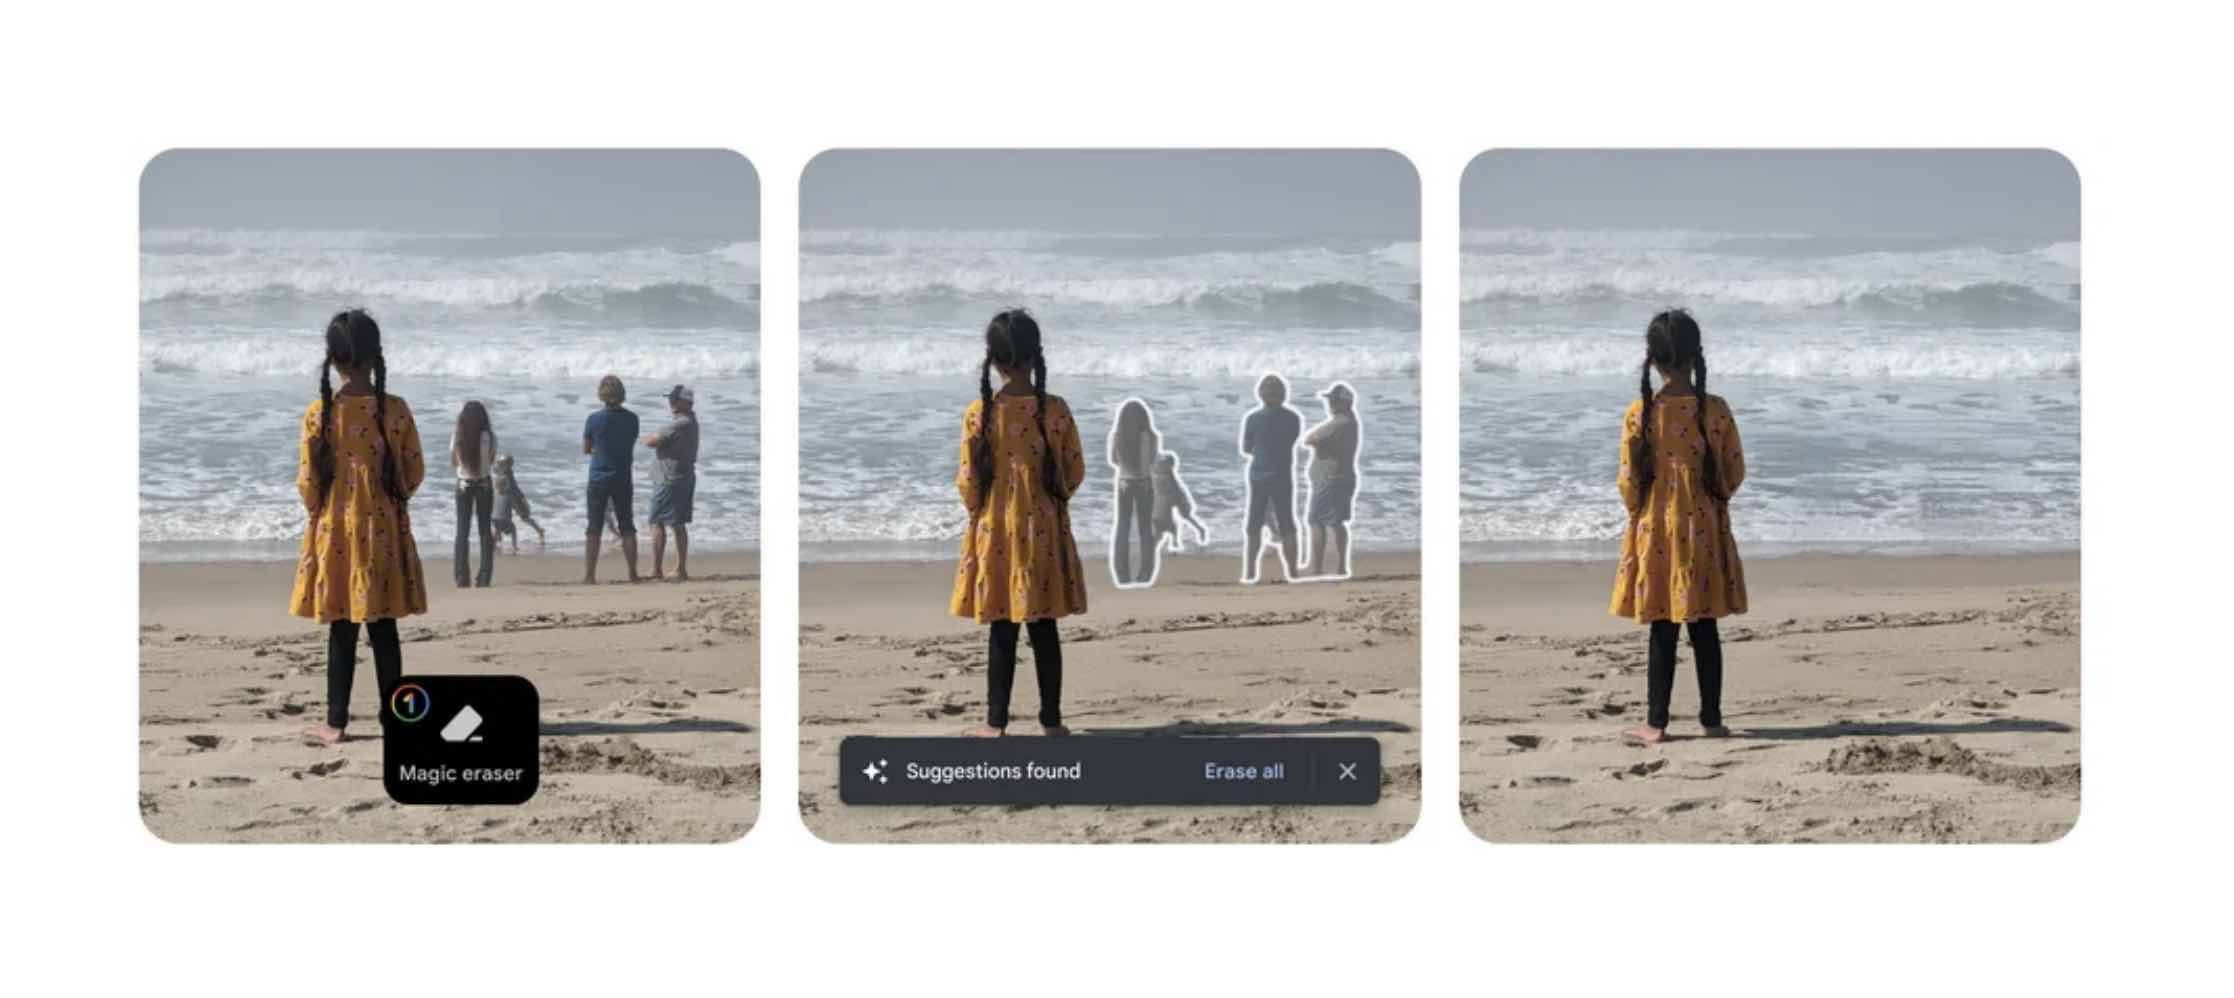 Google lança ‘borracha mágica’ para fotos no Android e iOS